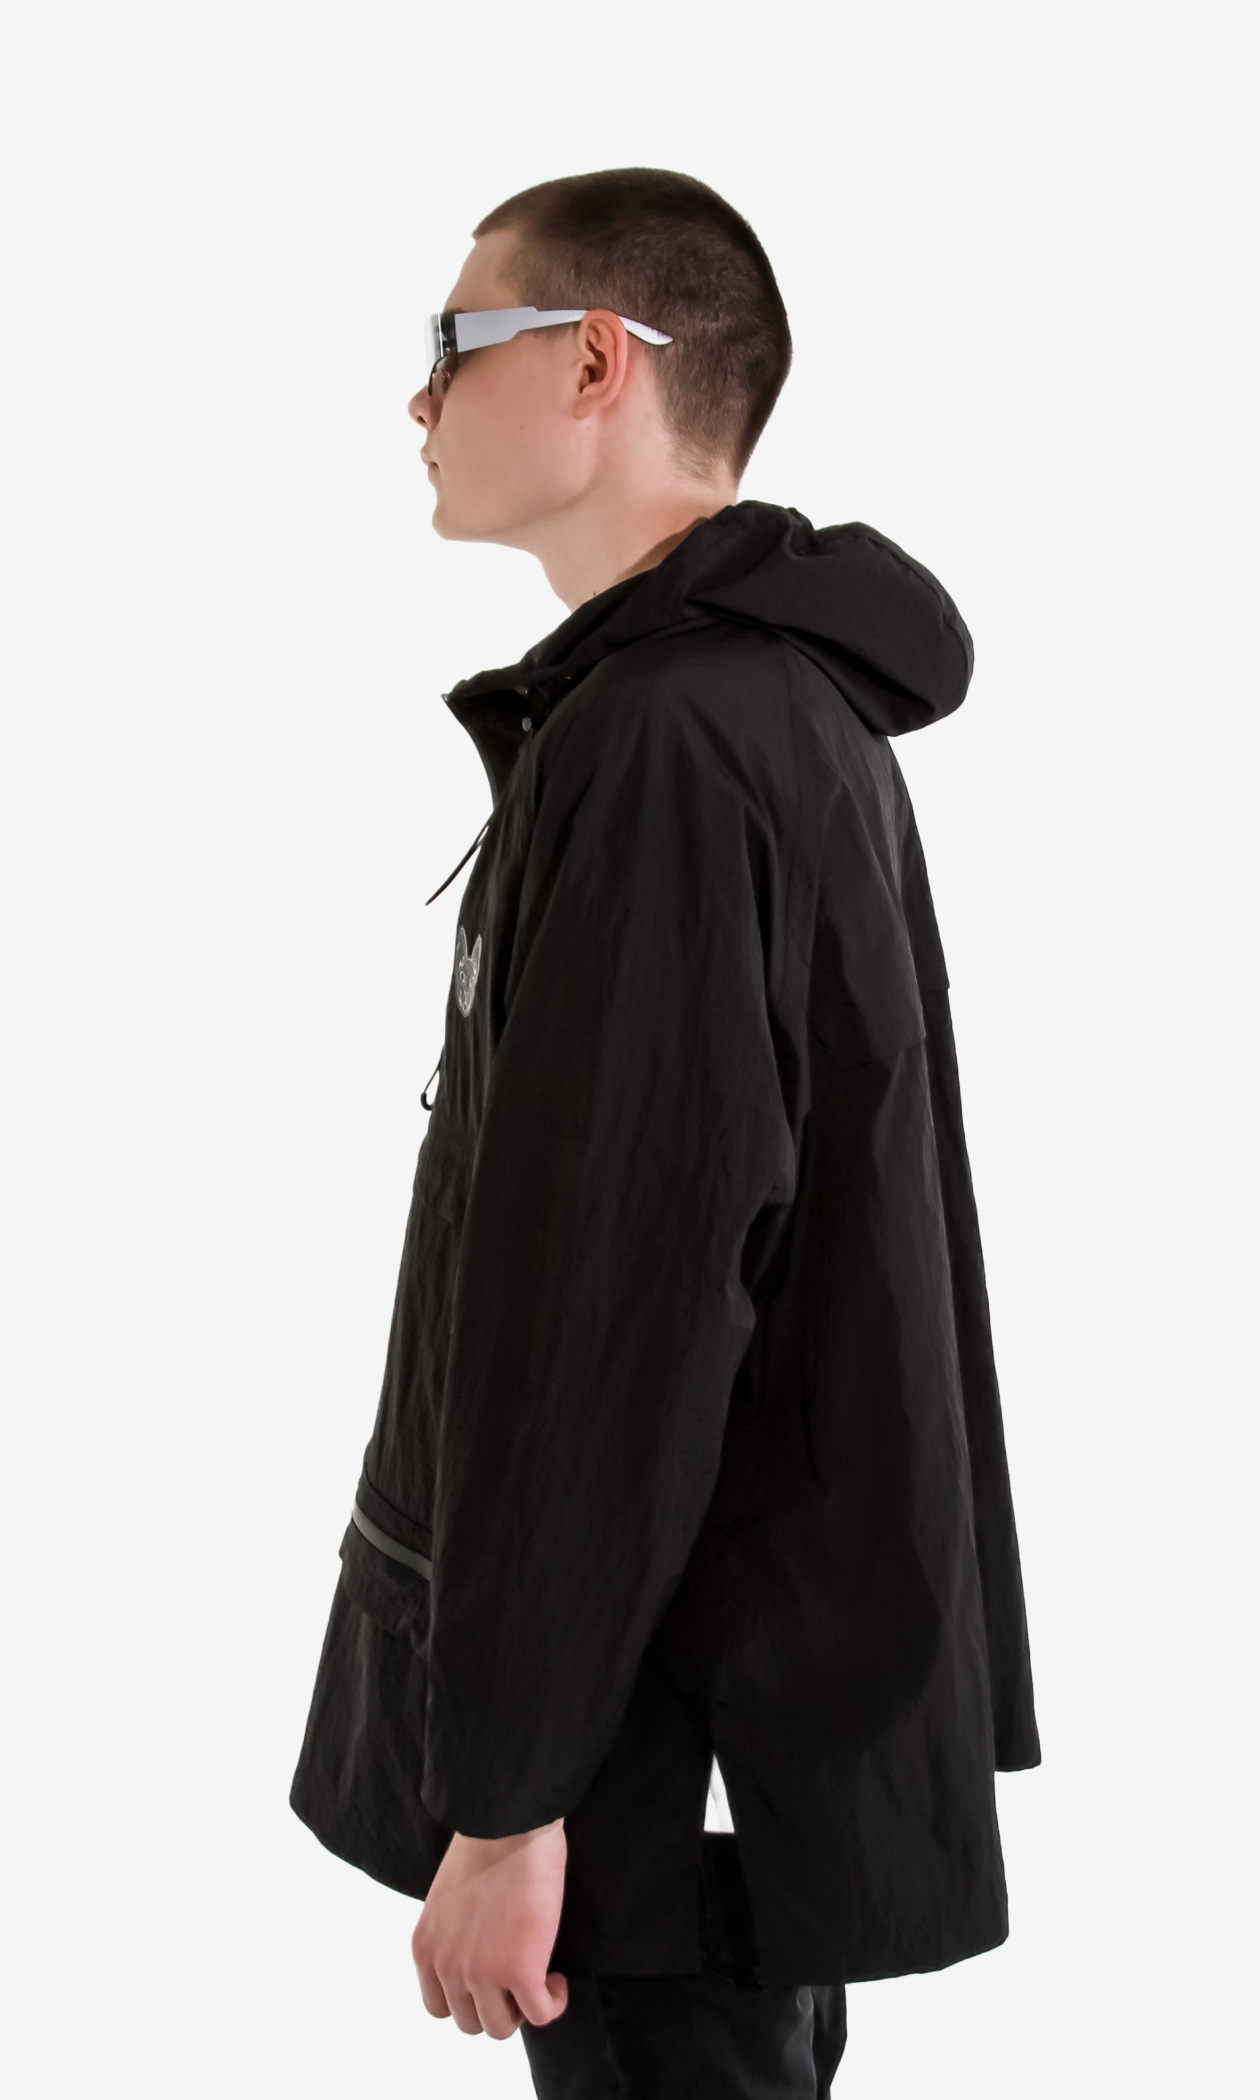 Rave-jacket-with-big-pockets-black-male